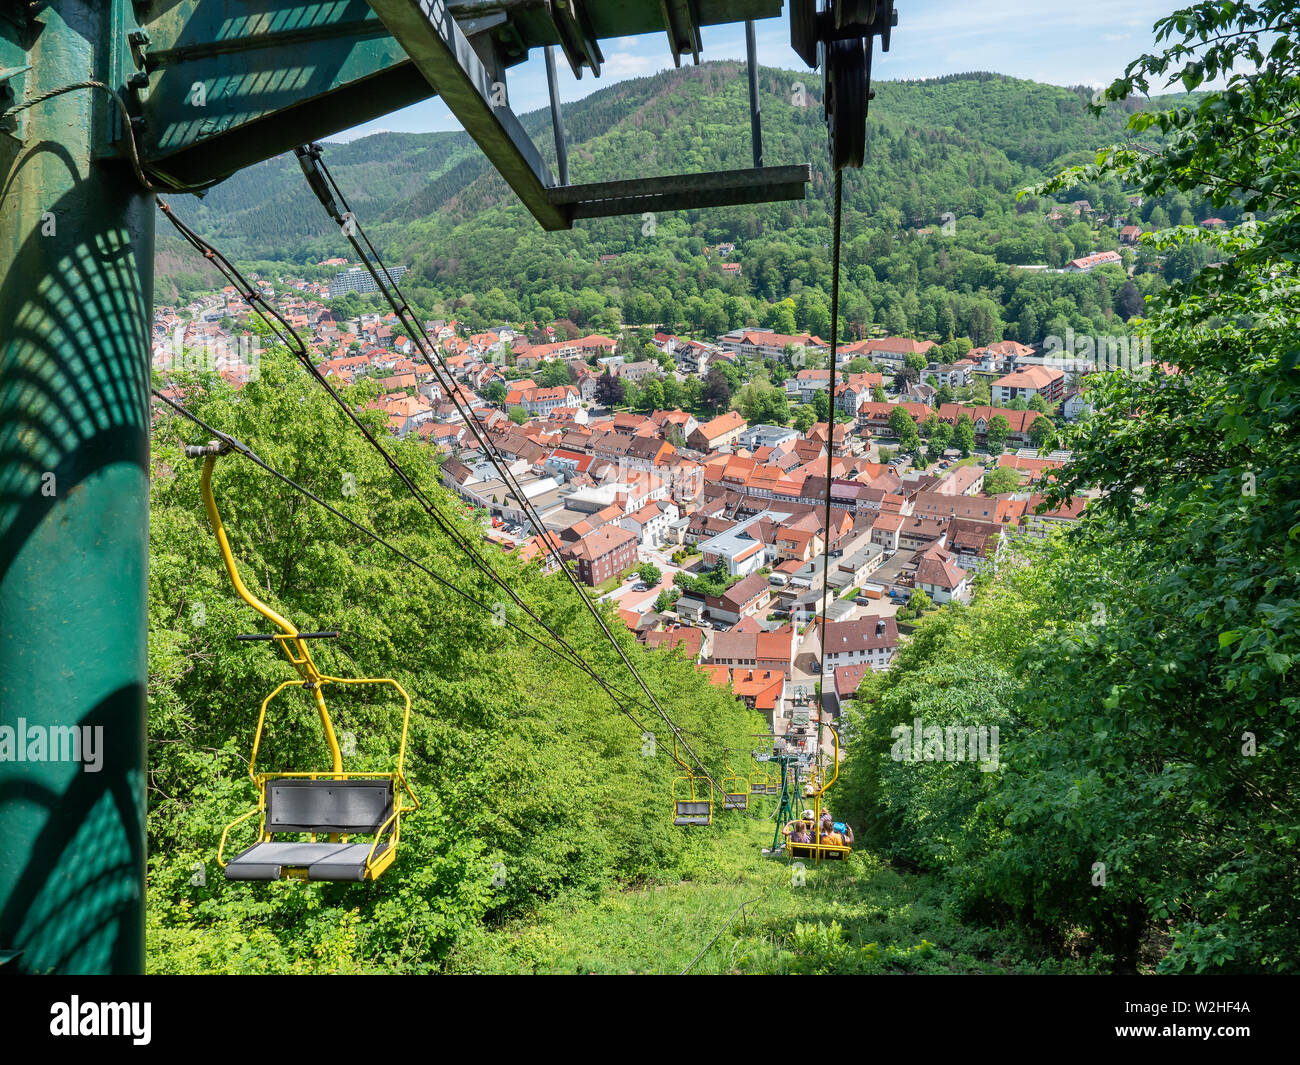 Suspension cable railway in Lauterberg, Harz Germany Stock Photo